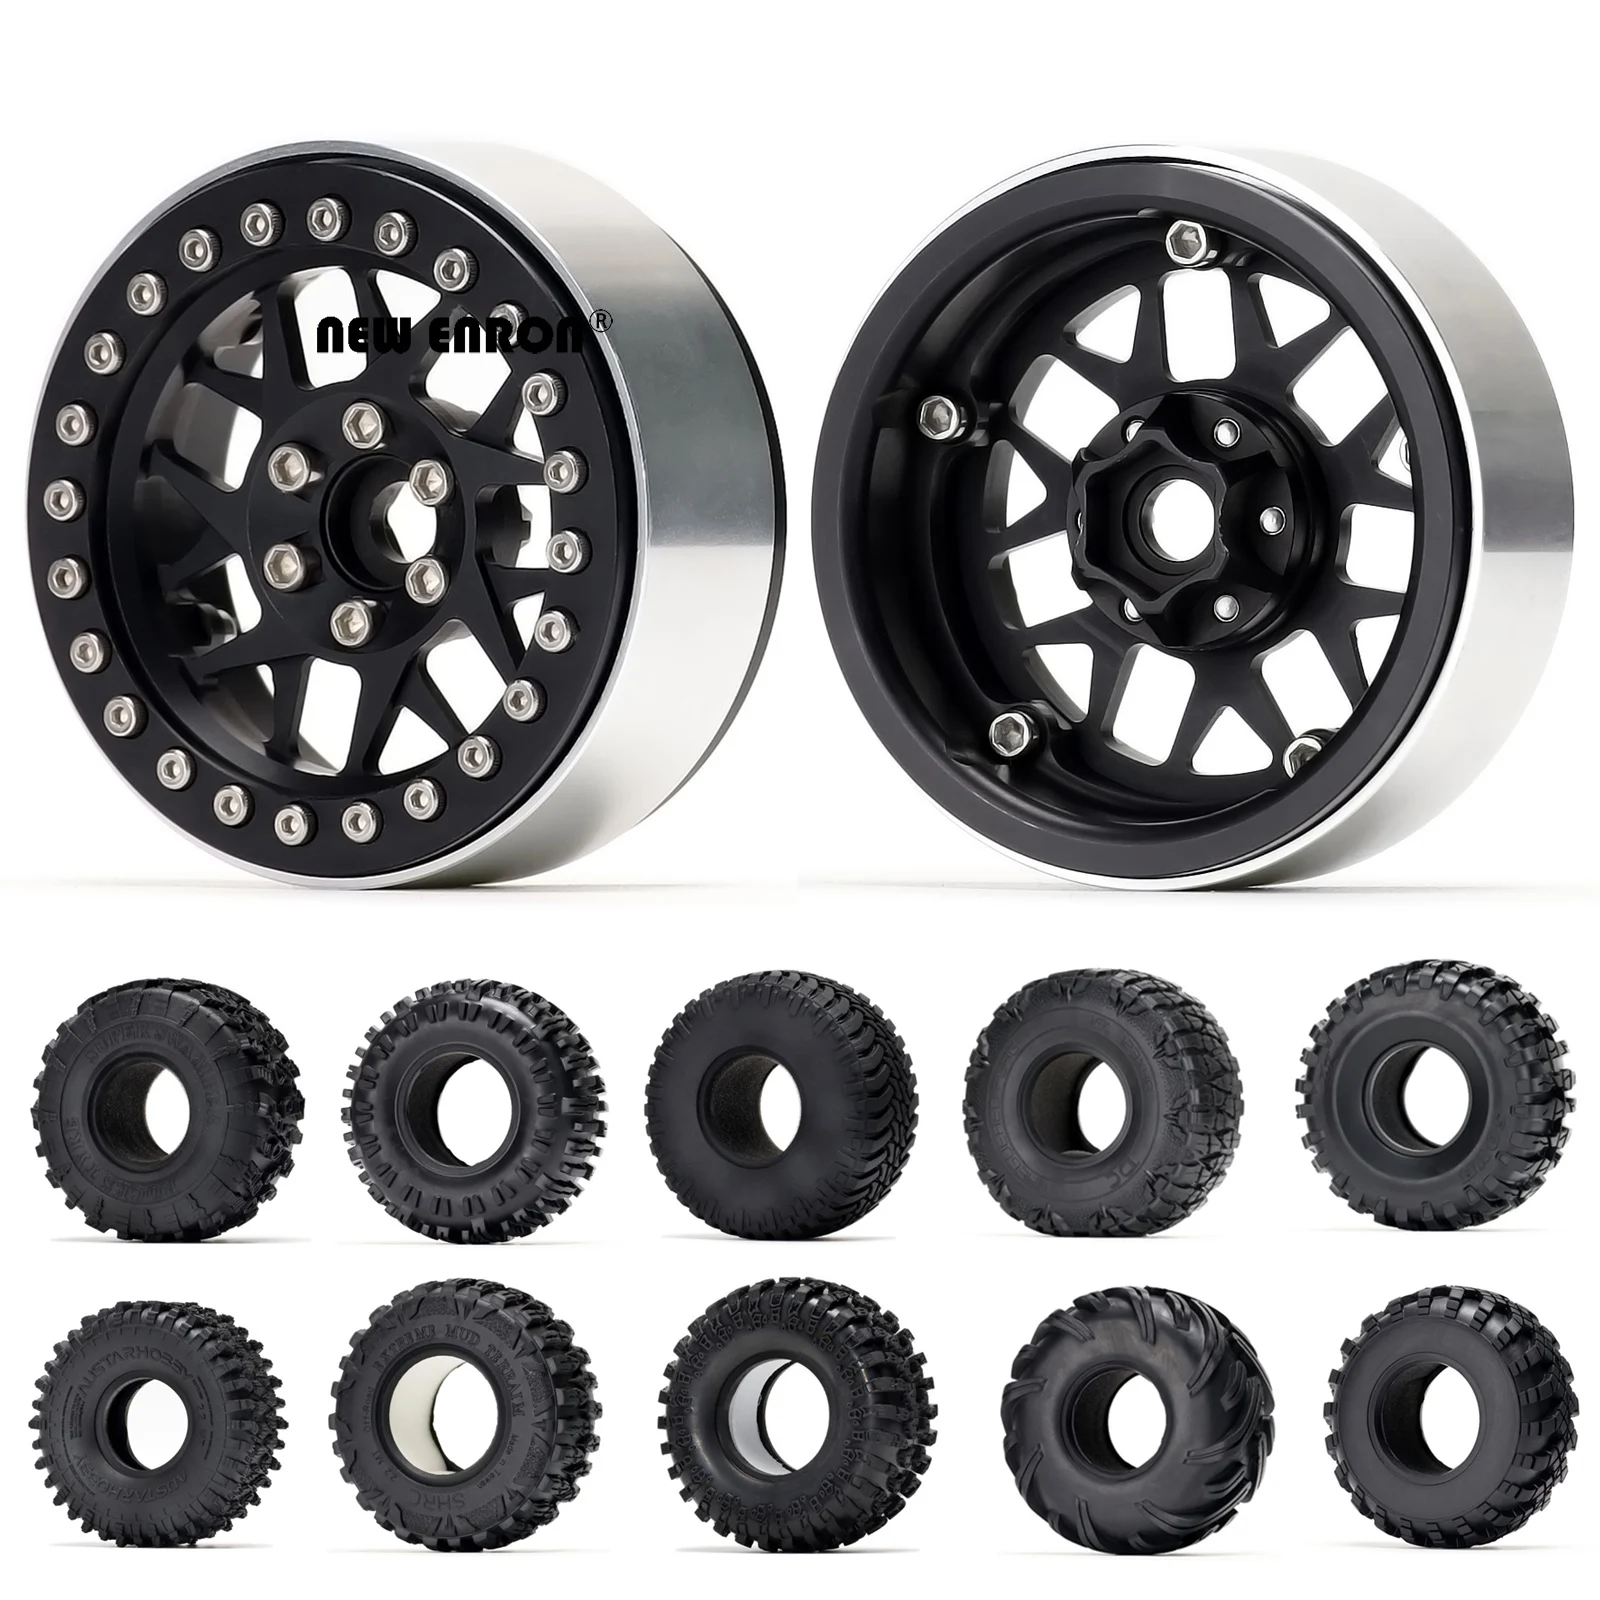 

NEW ENRON 2.2" Alloy Beadlock Wheels Rim & Rubber Tires 4Pcs for RC Car 1/10 Axial SCX10 90046 Traxxas TRX-6 Wraith 90048 RR10